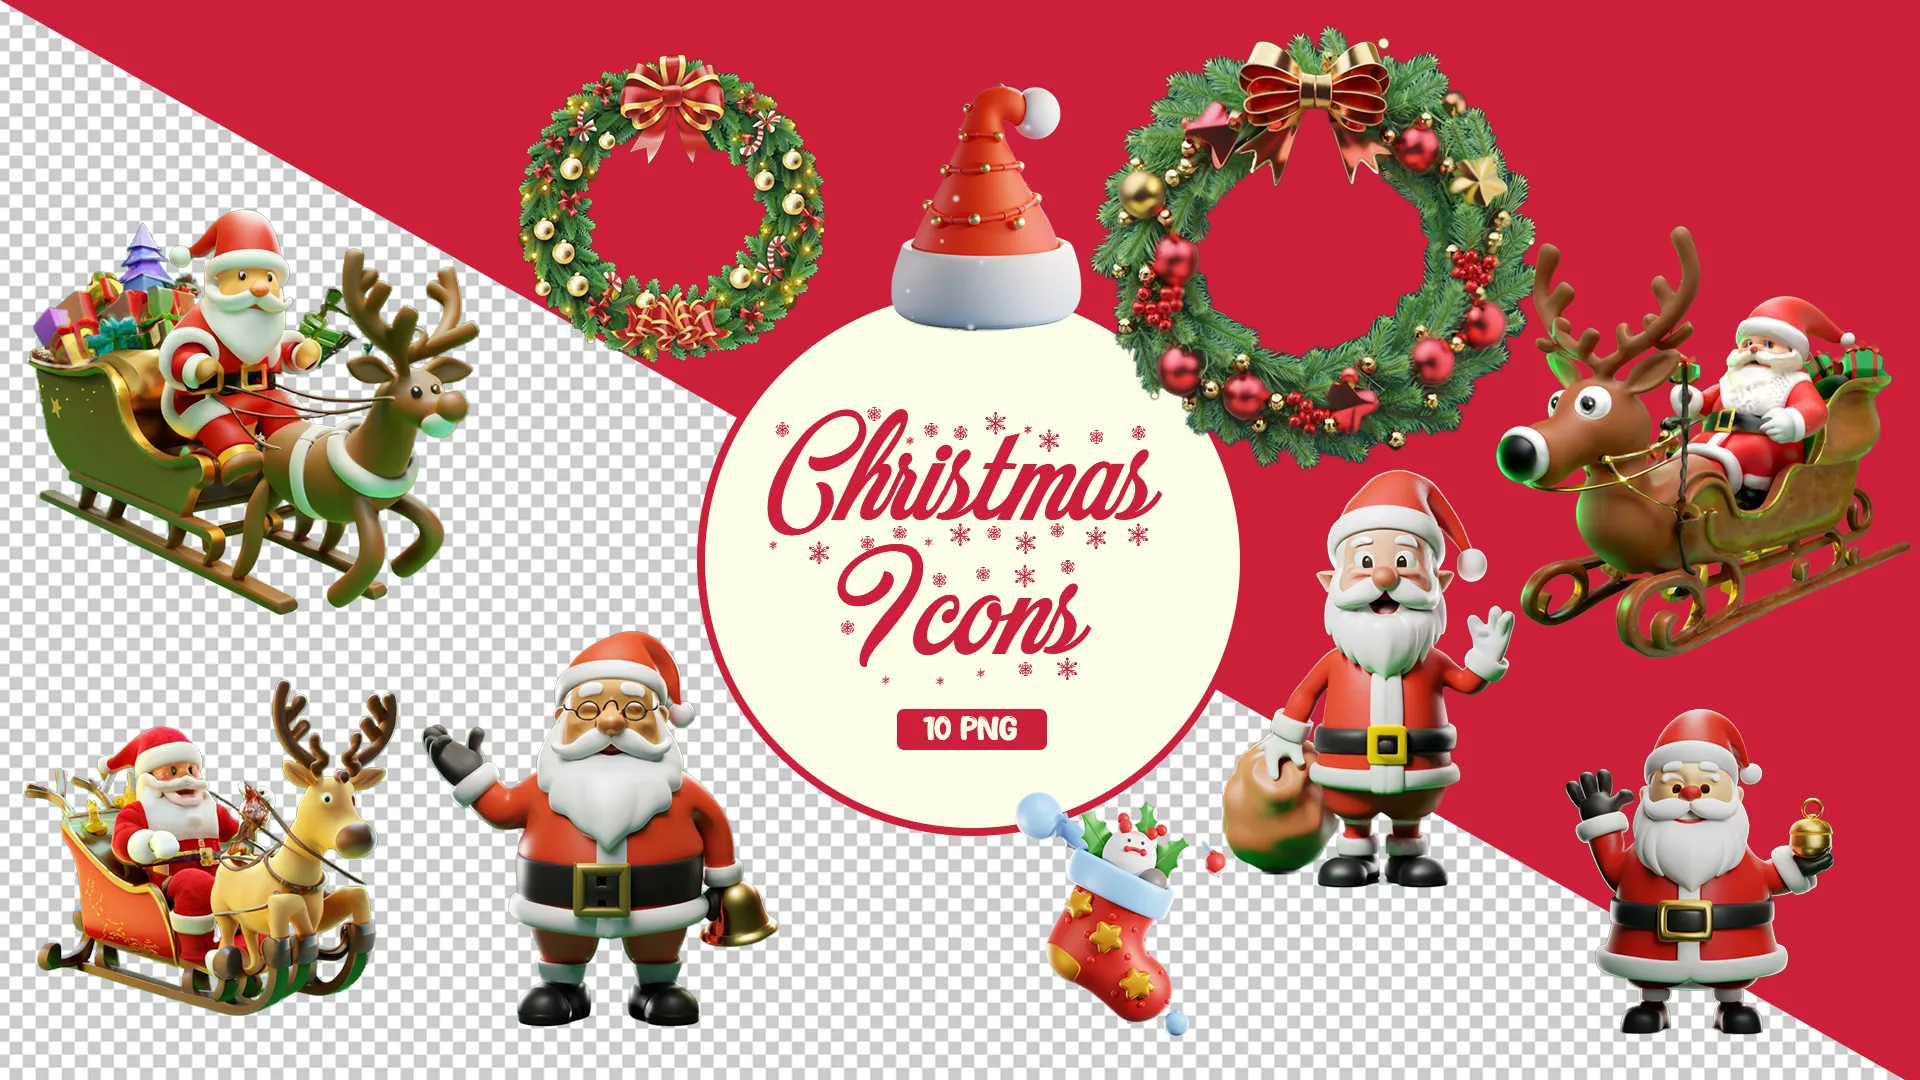 Christmas Icon and Santa Figures 3D